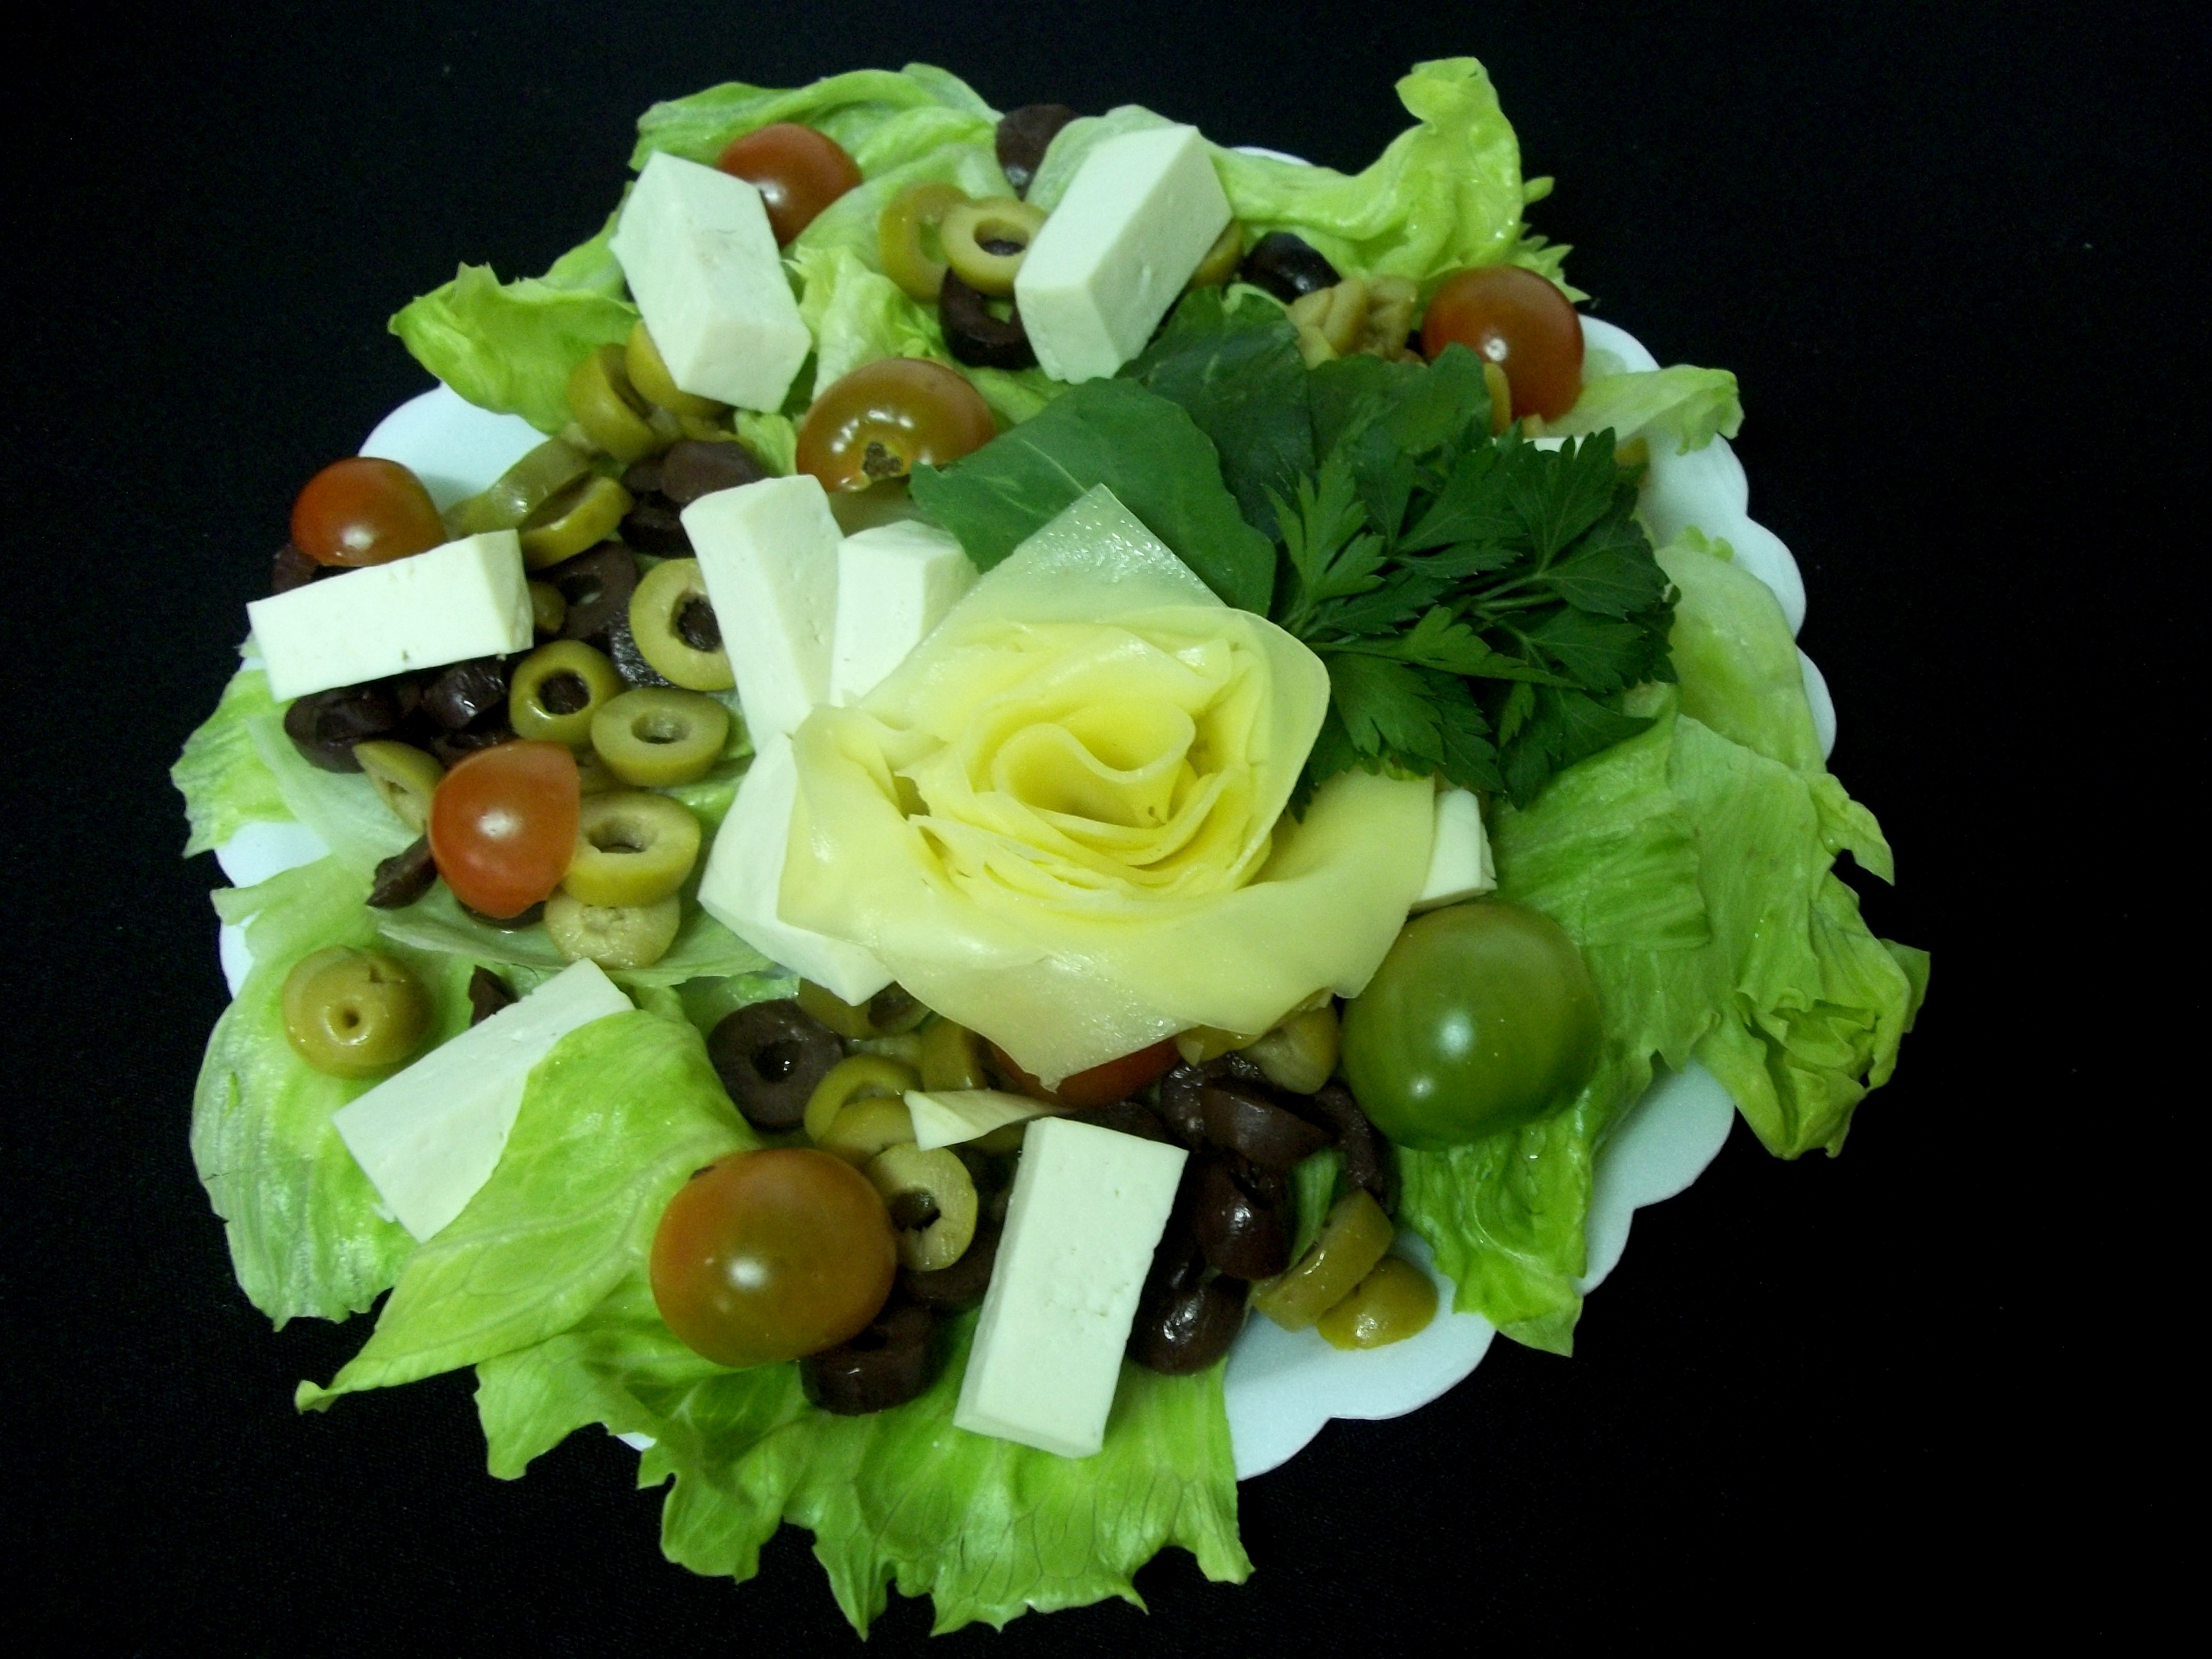 Salada Grega 